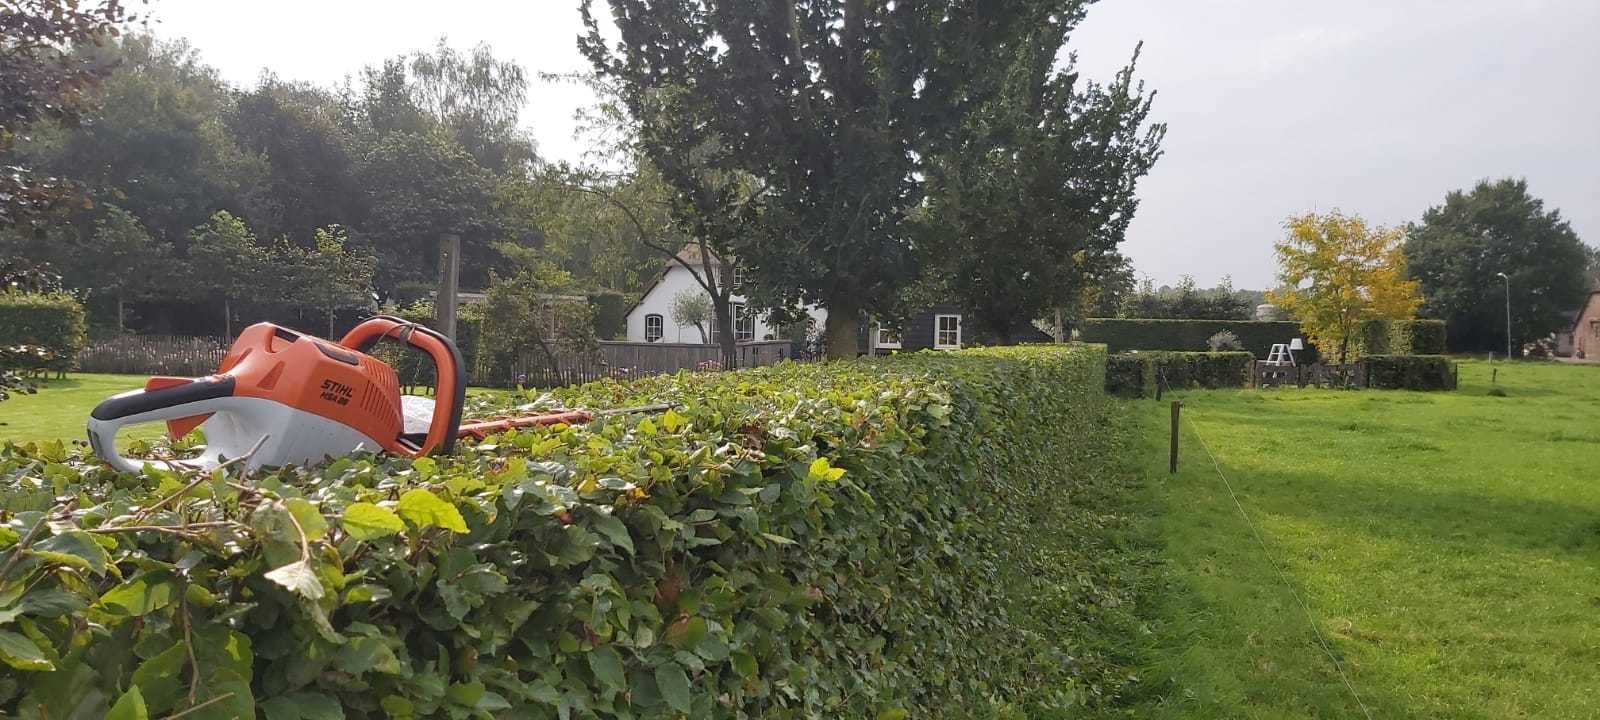 Tuinonderhoud Hoveniersbedrijf Vos Tuinvisie tuinmannen